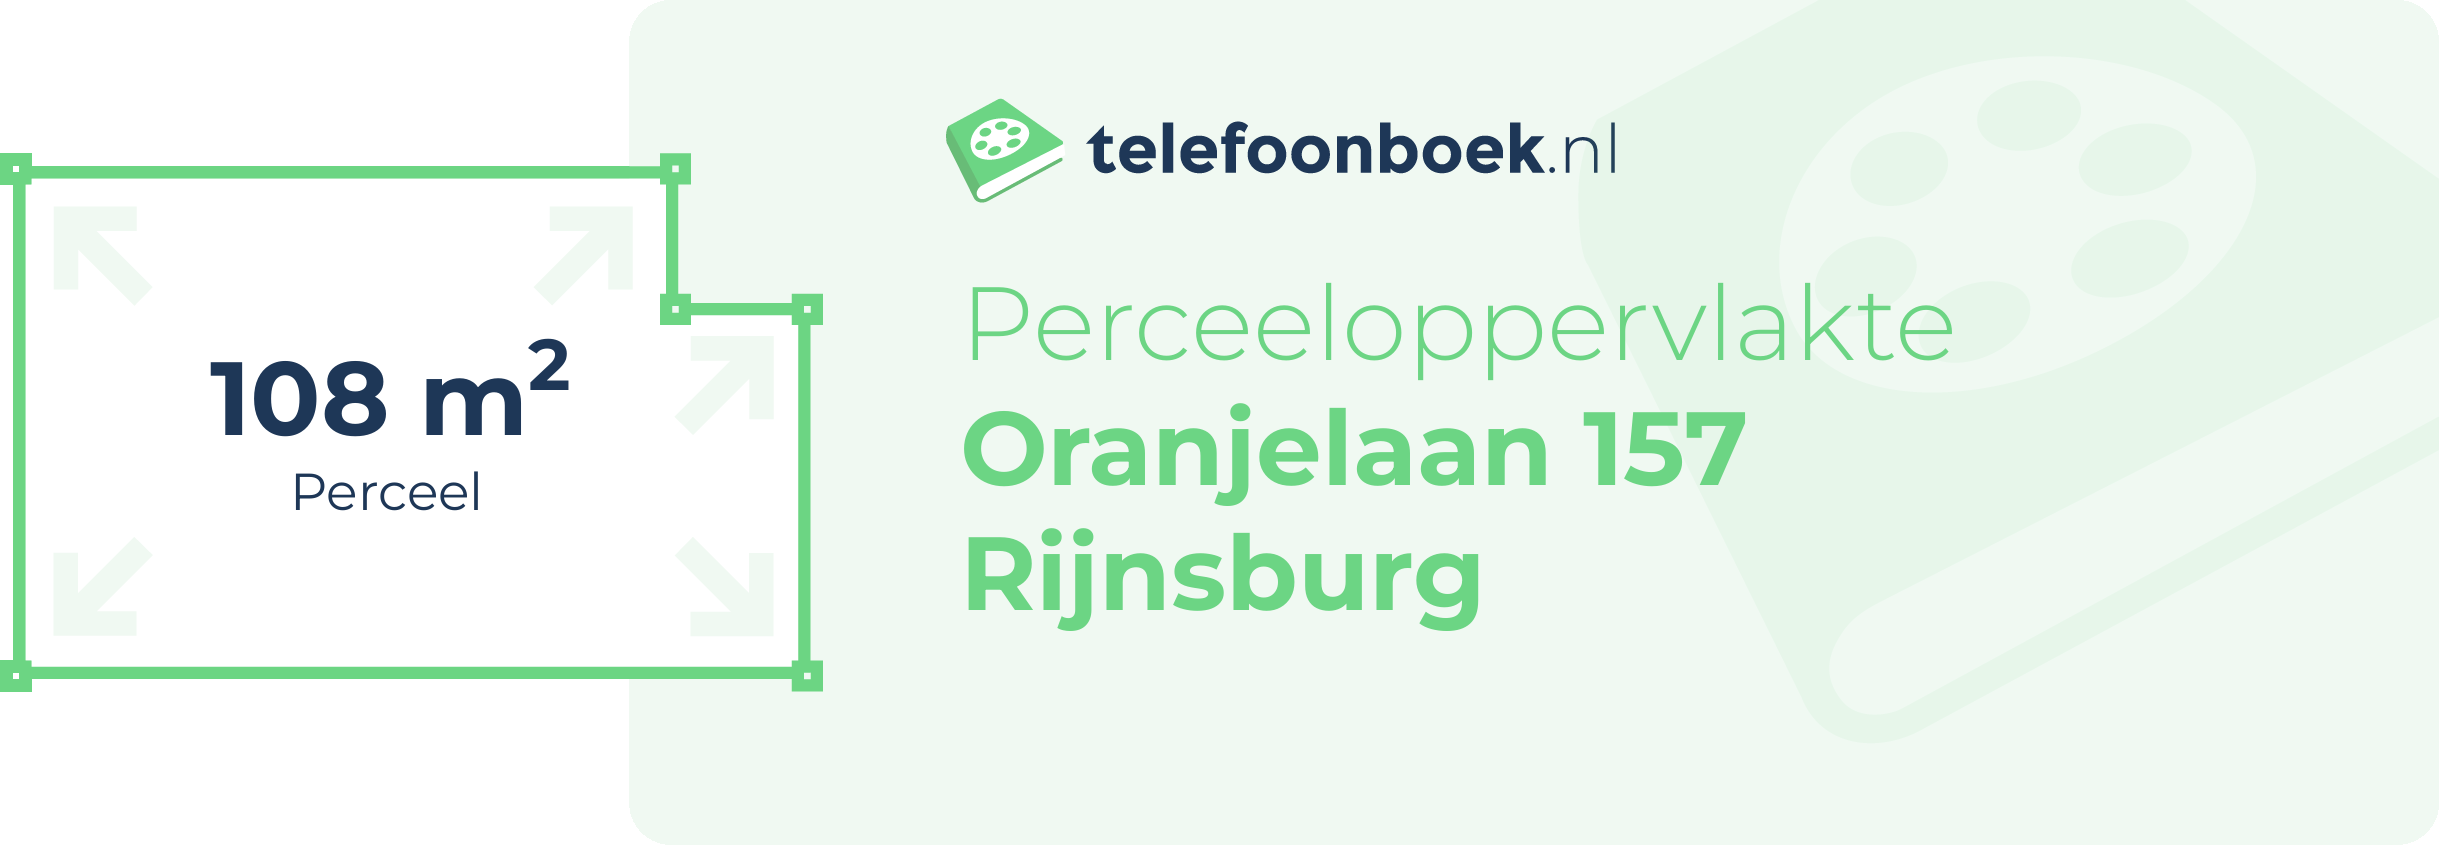 Perceeloppervlakte Oranjelaan 157 Rijnsburg